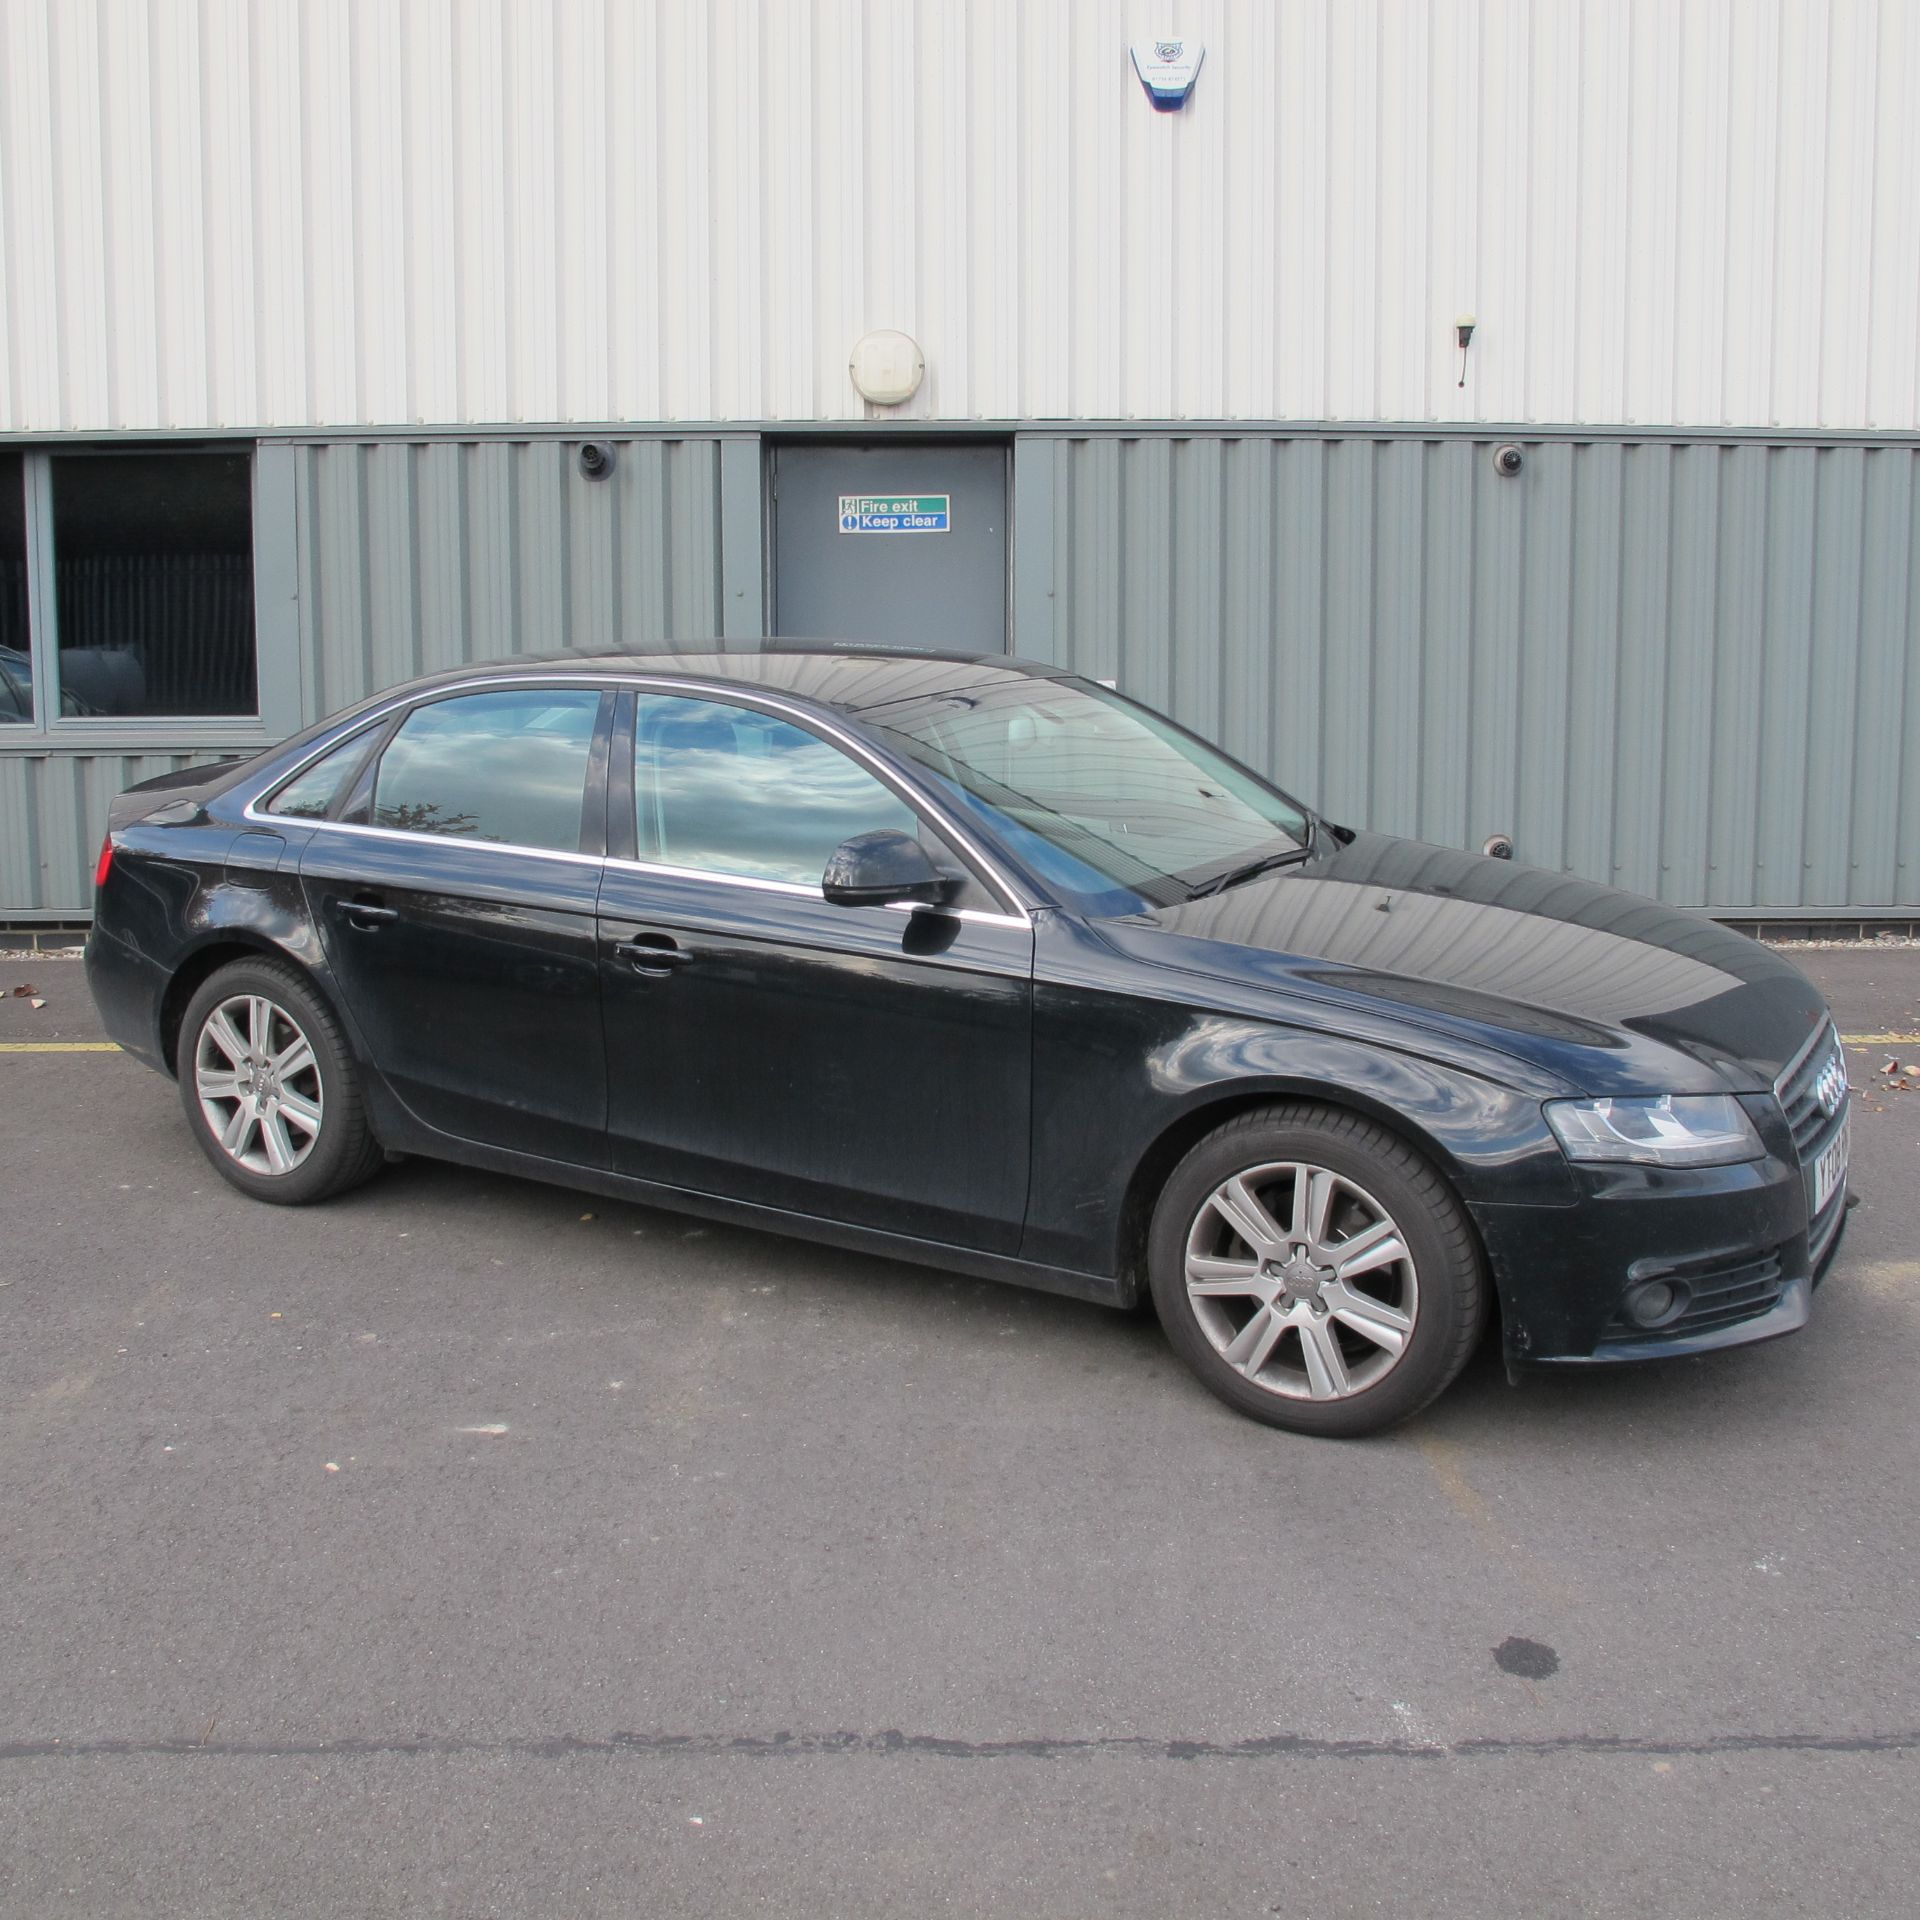 (08) Audi A4 SE TDI 6 Speed Four Door Saloon; 2.0 Diesel Engine; Registration No YT08 RMY:  Black;